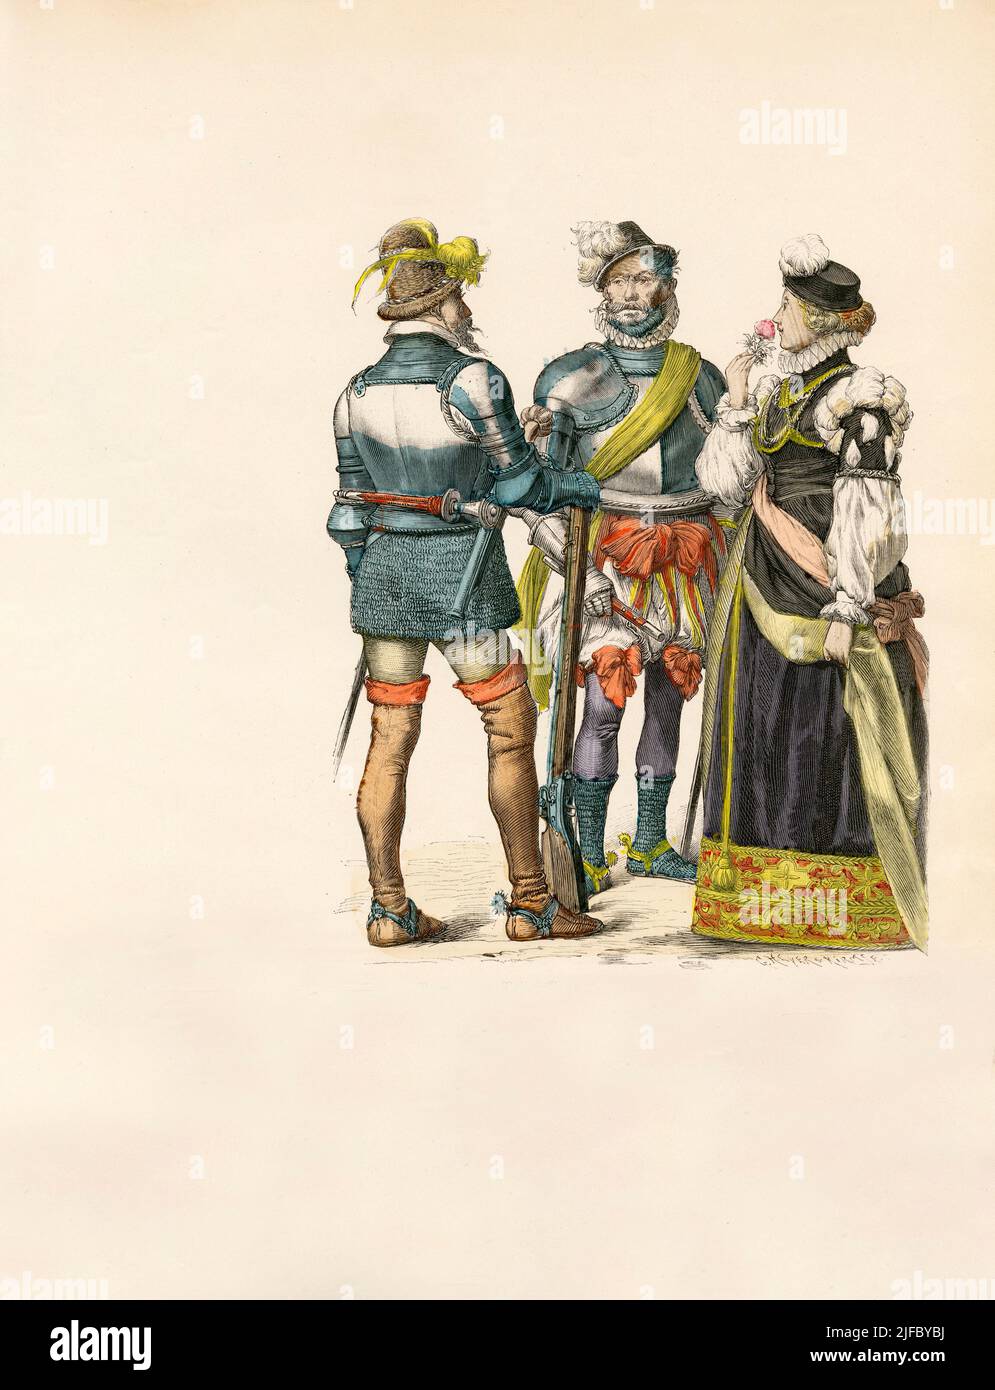 Cavalryman, Cavalry General under Charles V, Lady, Germany, 1560, Illustration, The History of Costume, Braun & Schneider, Munich, Germany, 1861-1880 Stock Photo